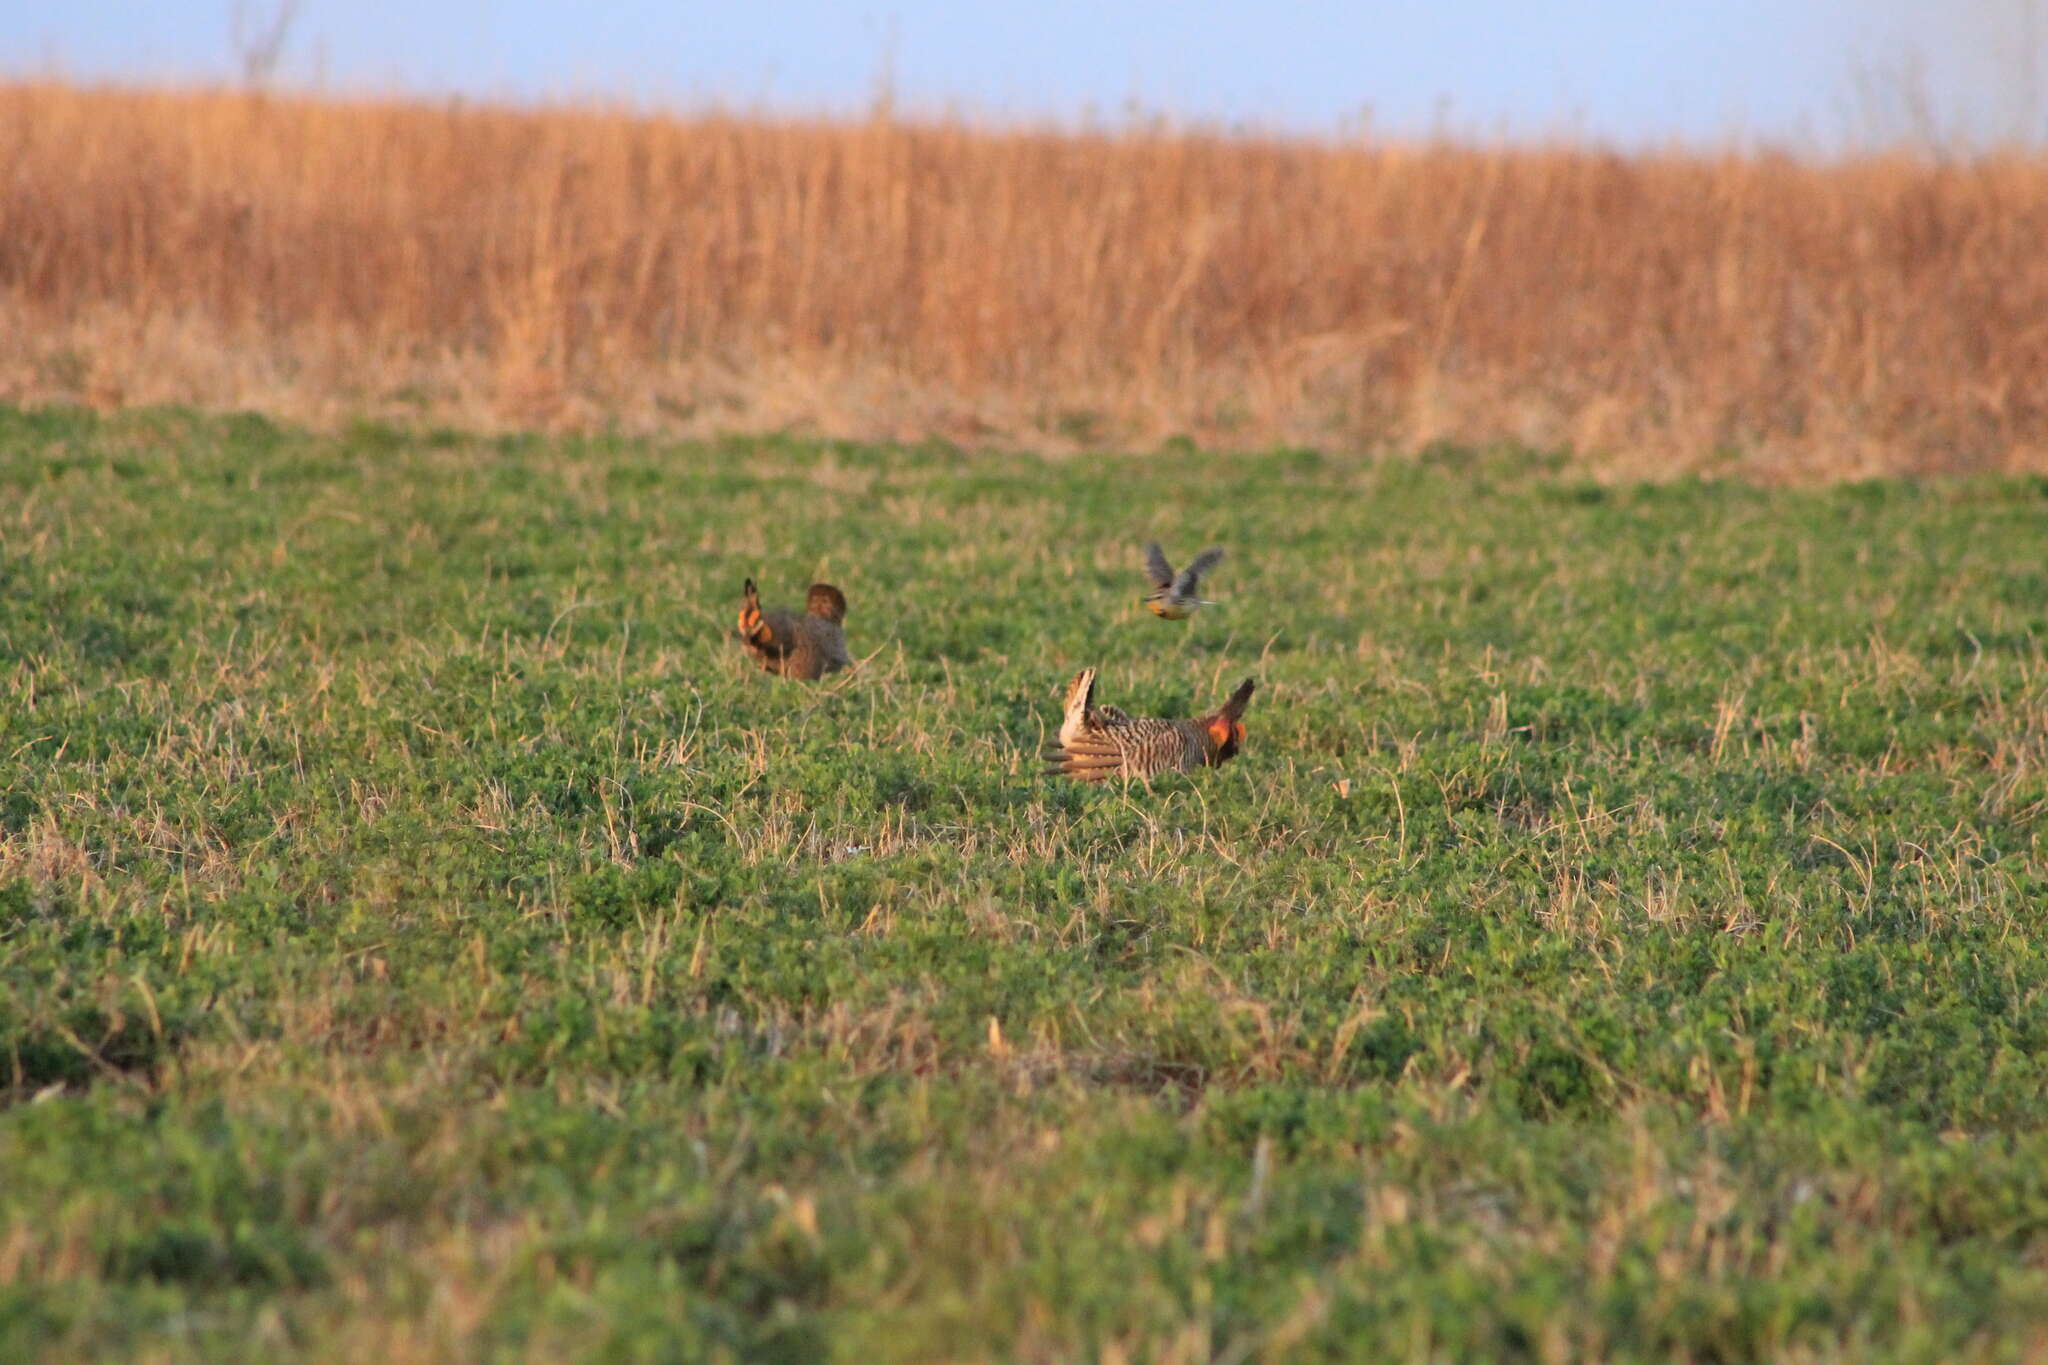 Image of Greater Prairie-chicken